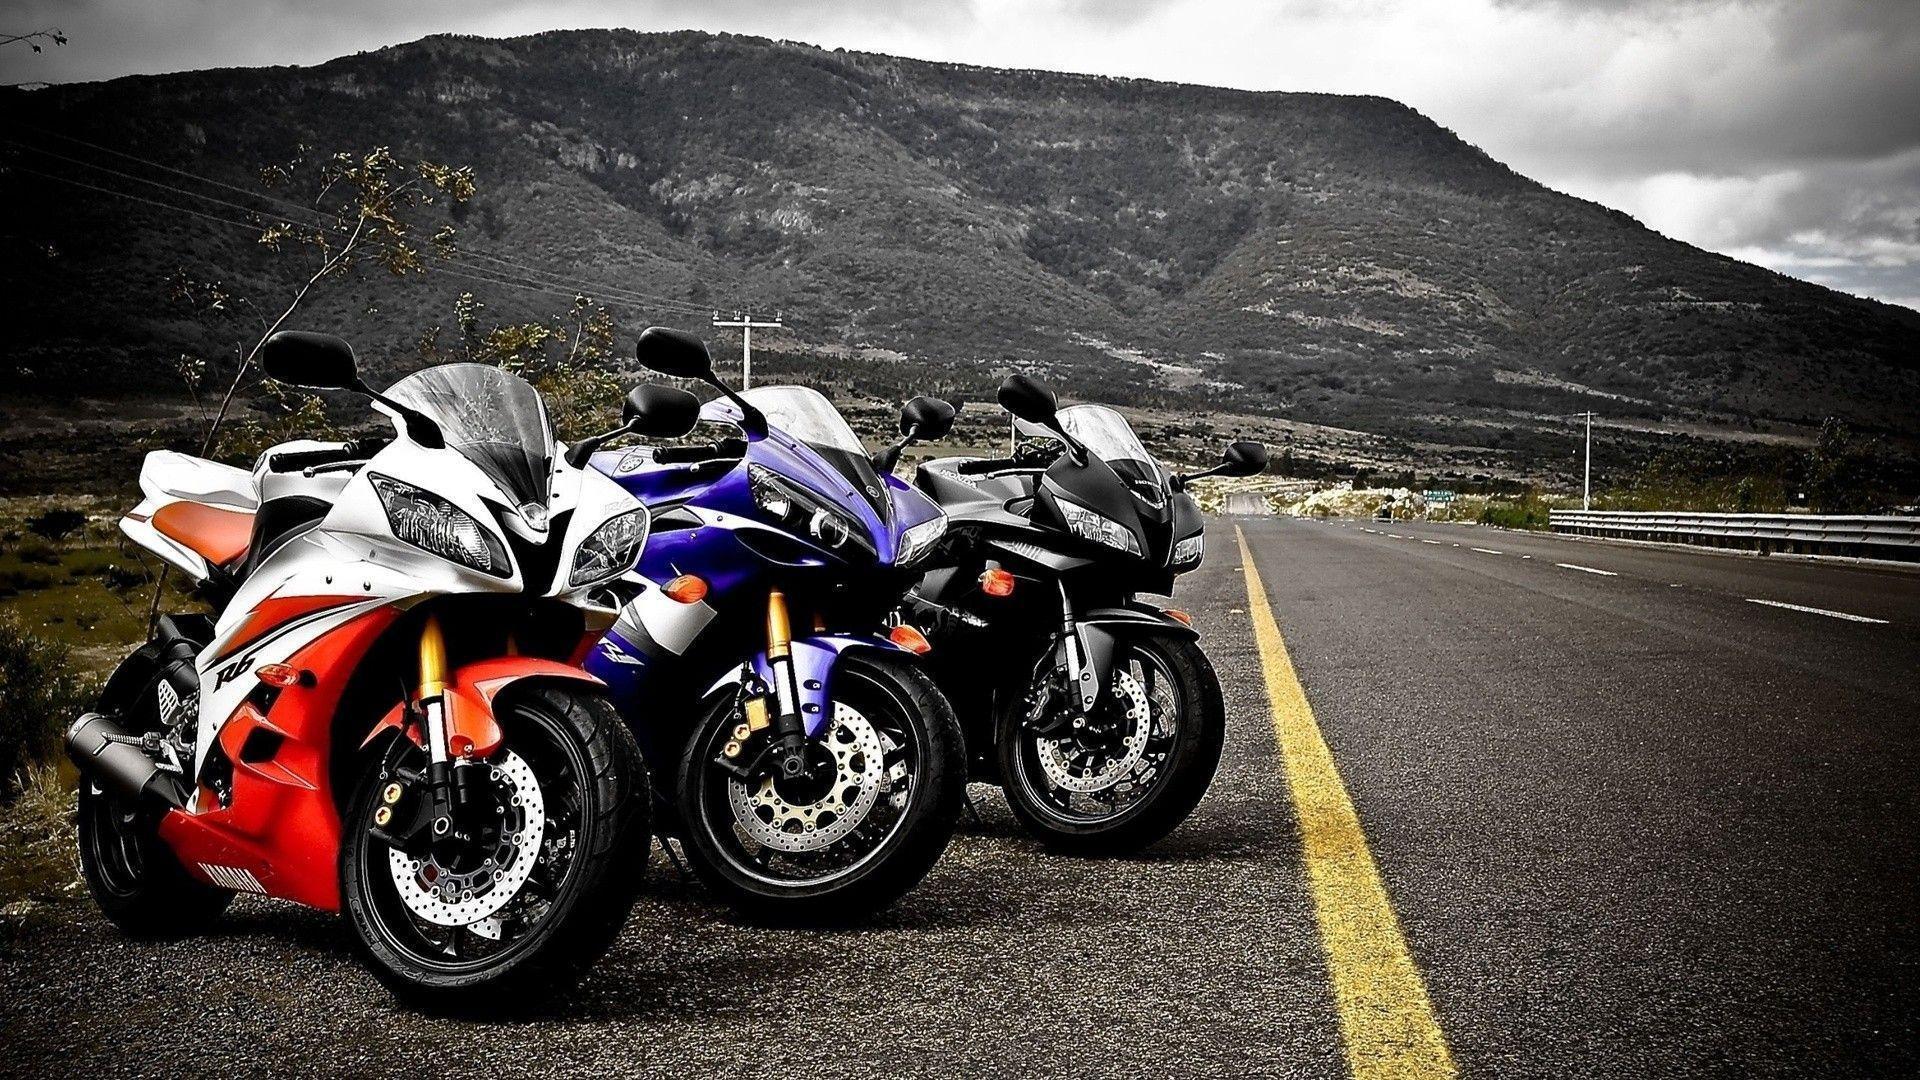 yamaha r6 honda cbr 600rr motorbikes mountain road wide HD